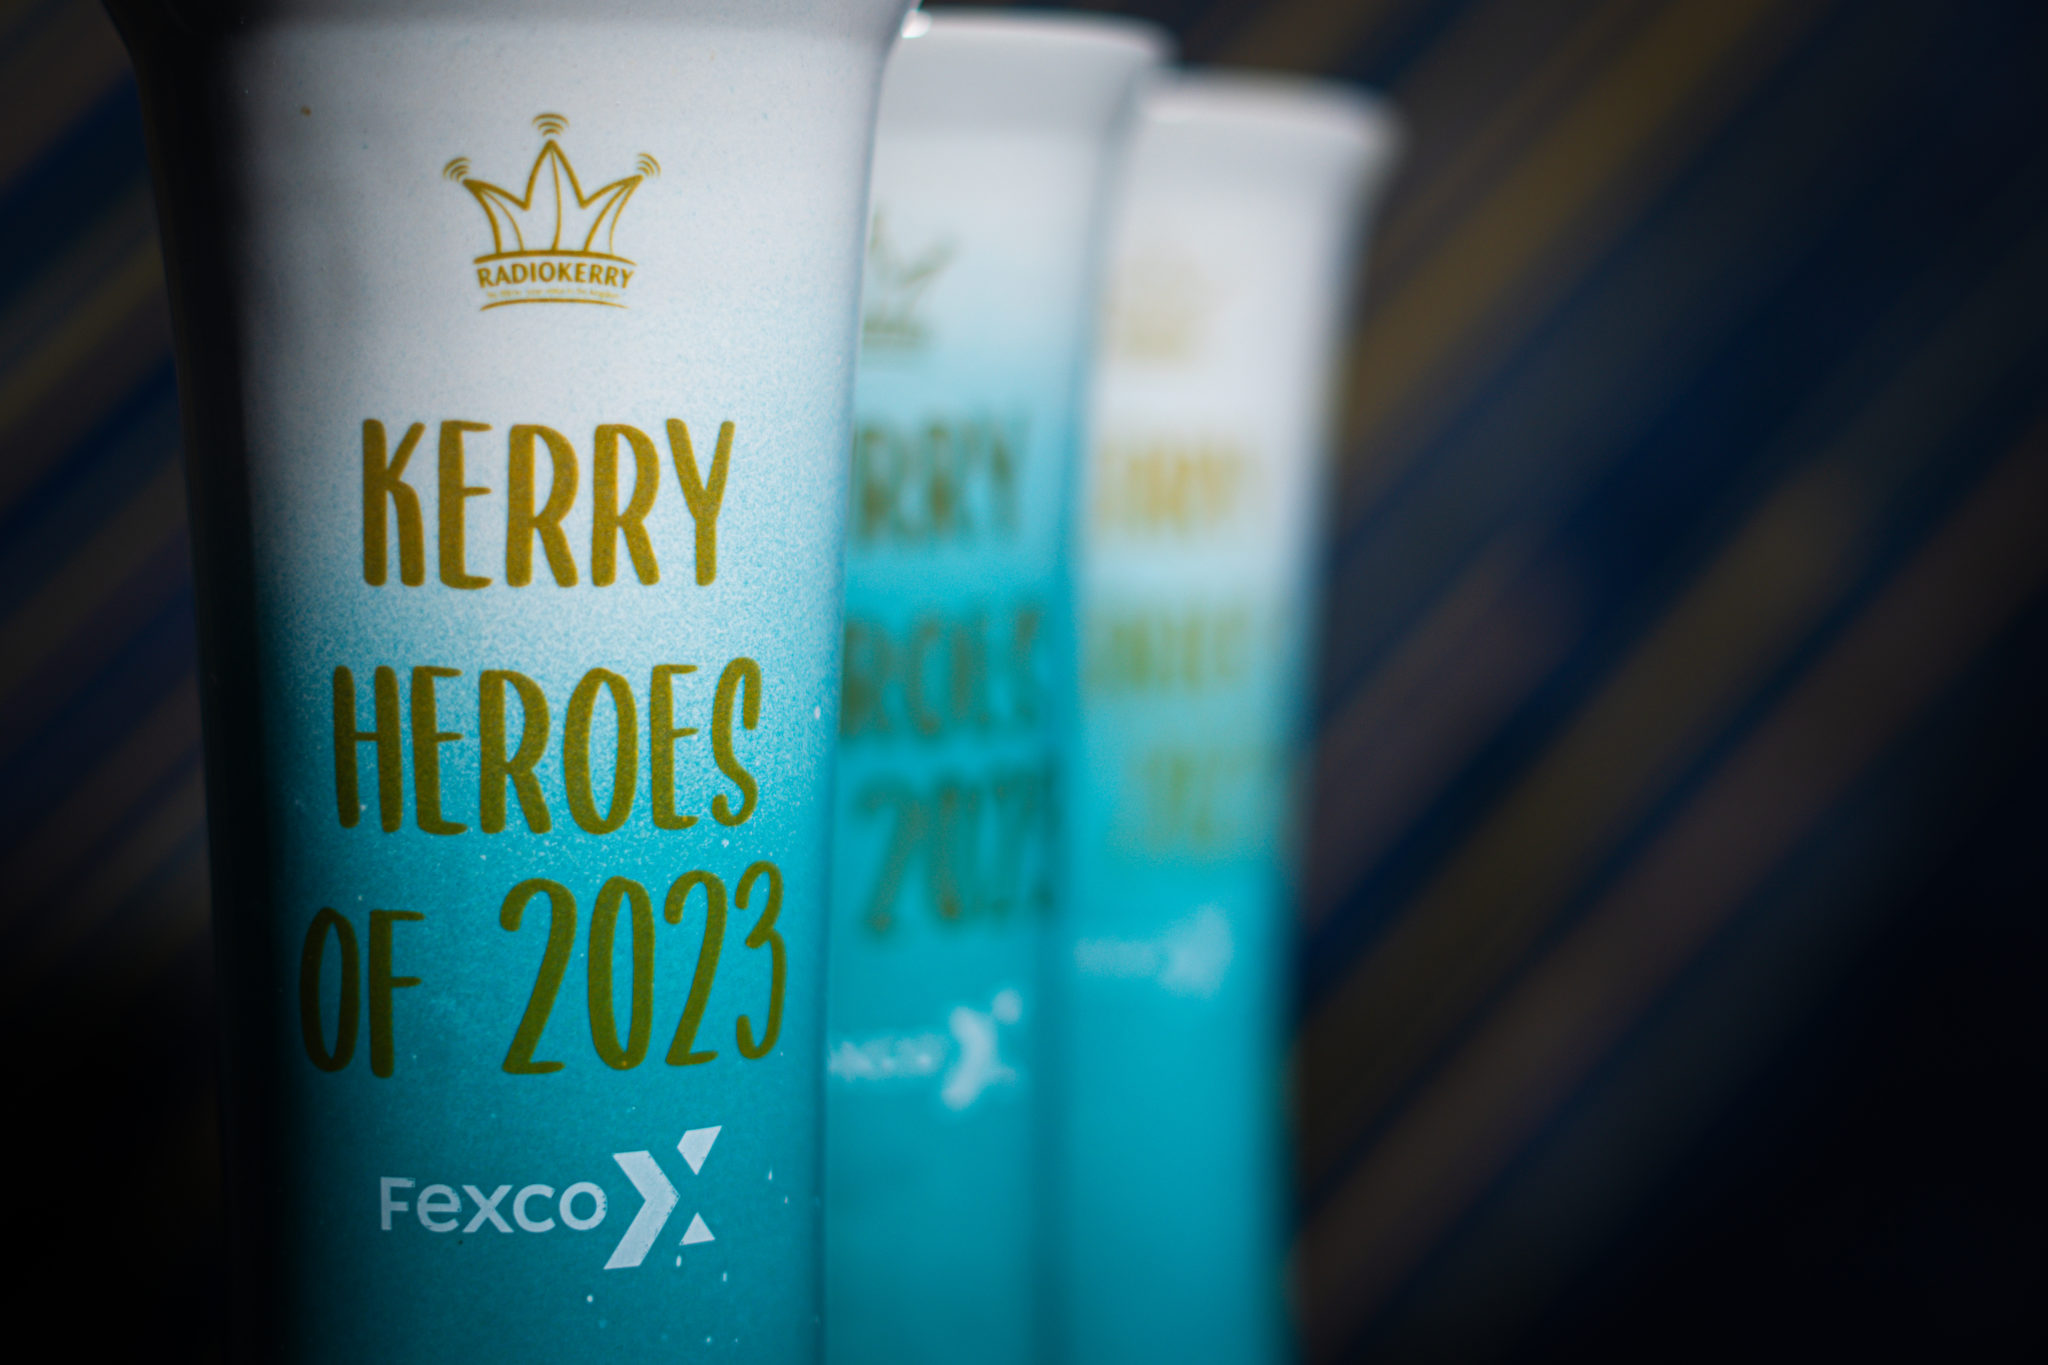 Kerry Hero Awards of 2023